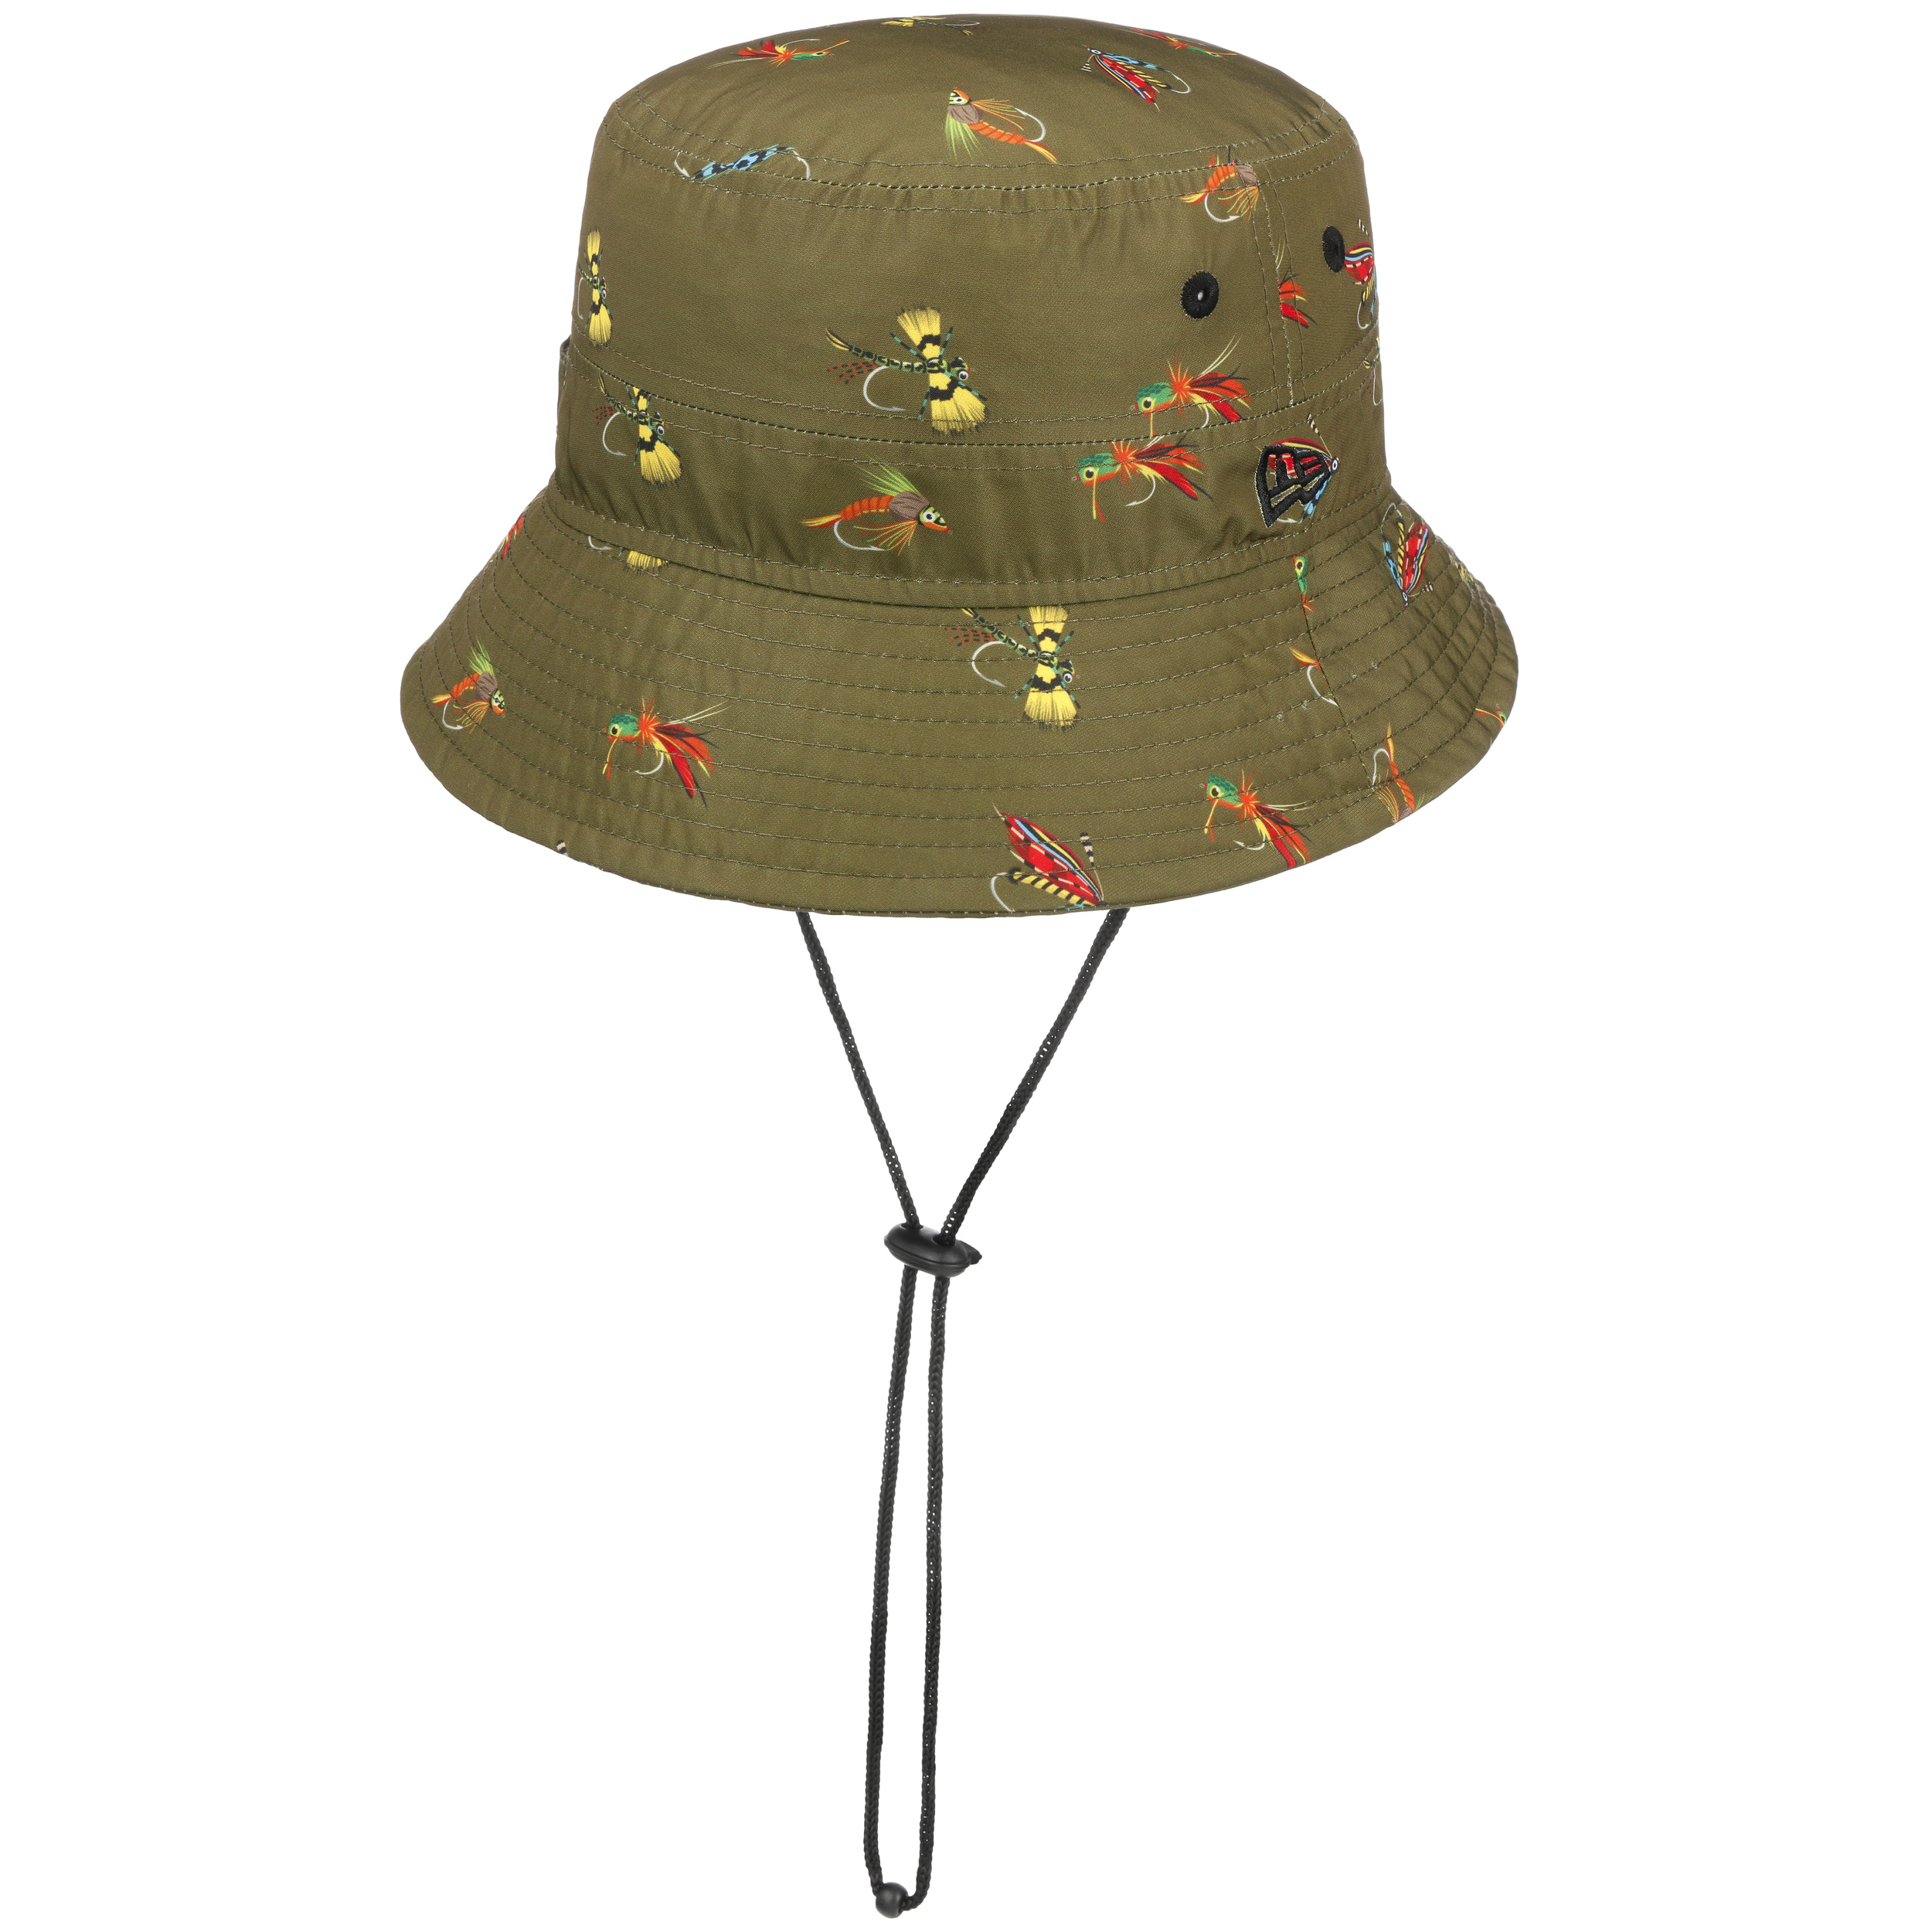 Fly Fishing Bucket Hat on Sale